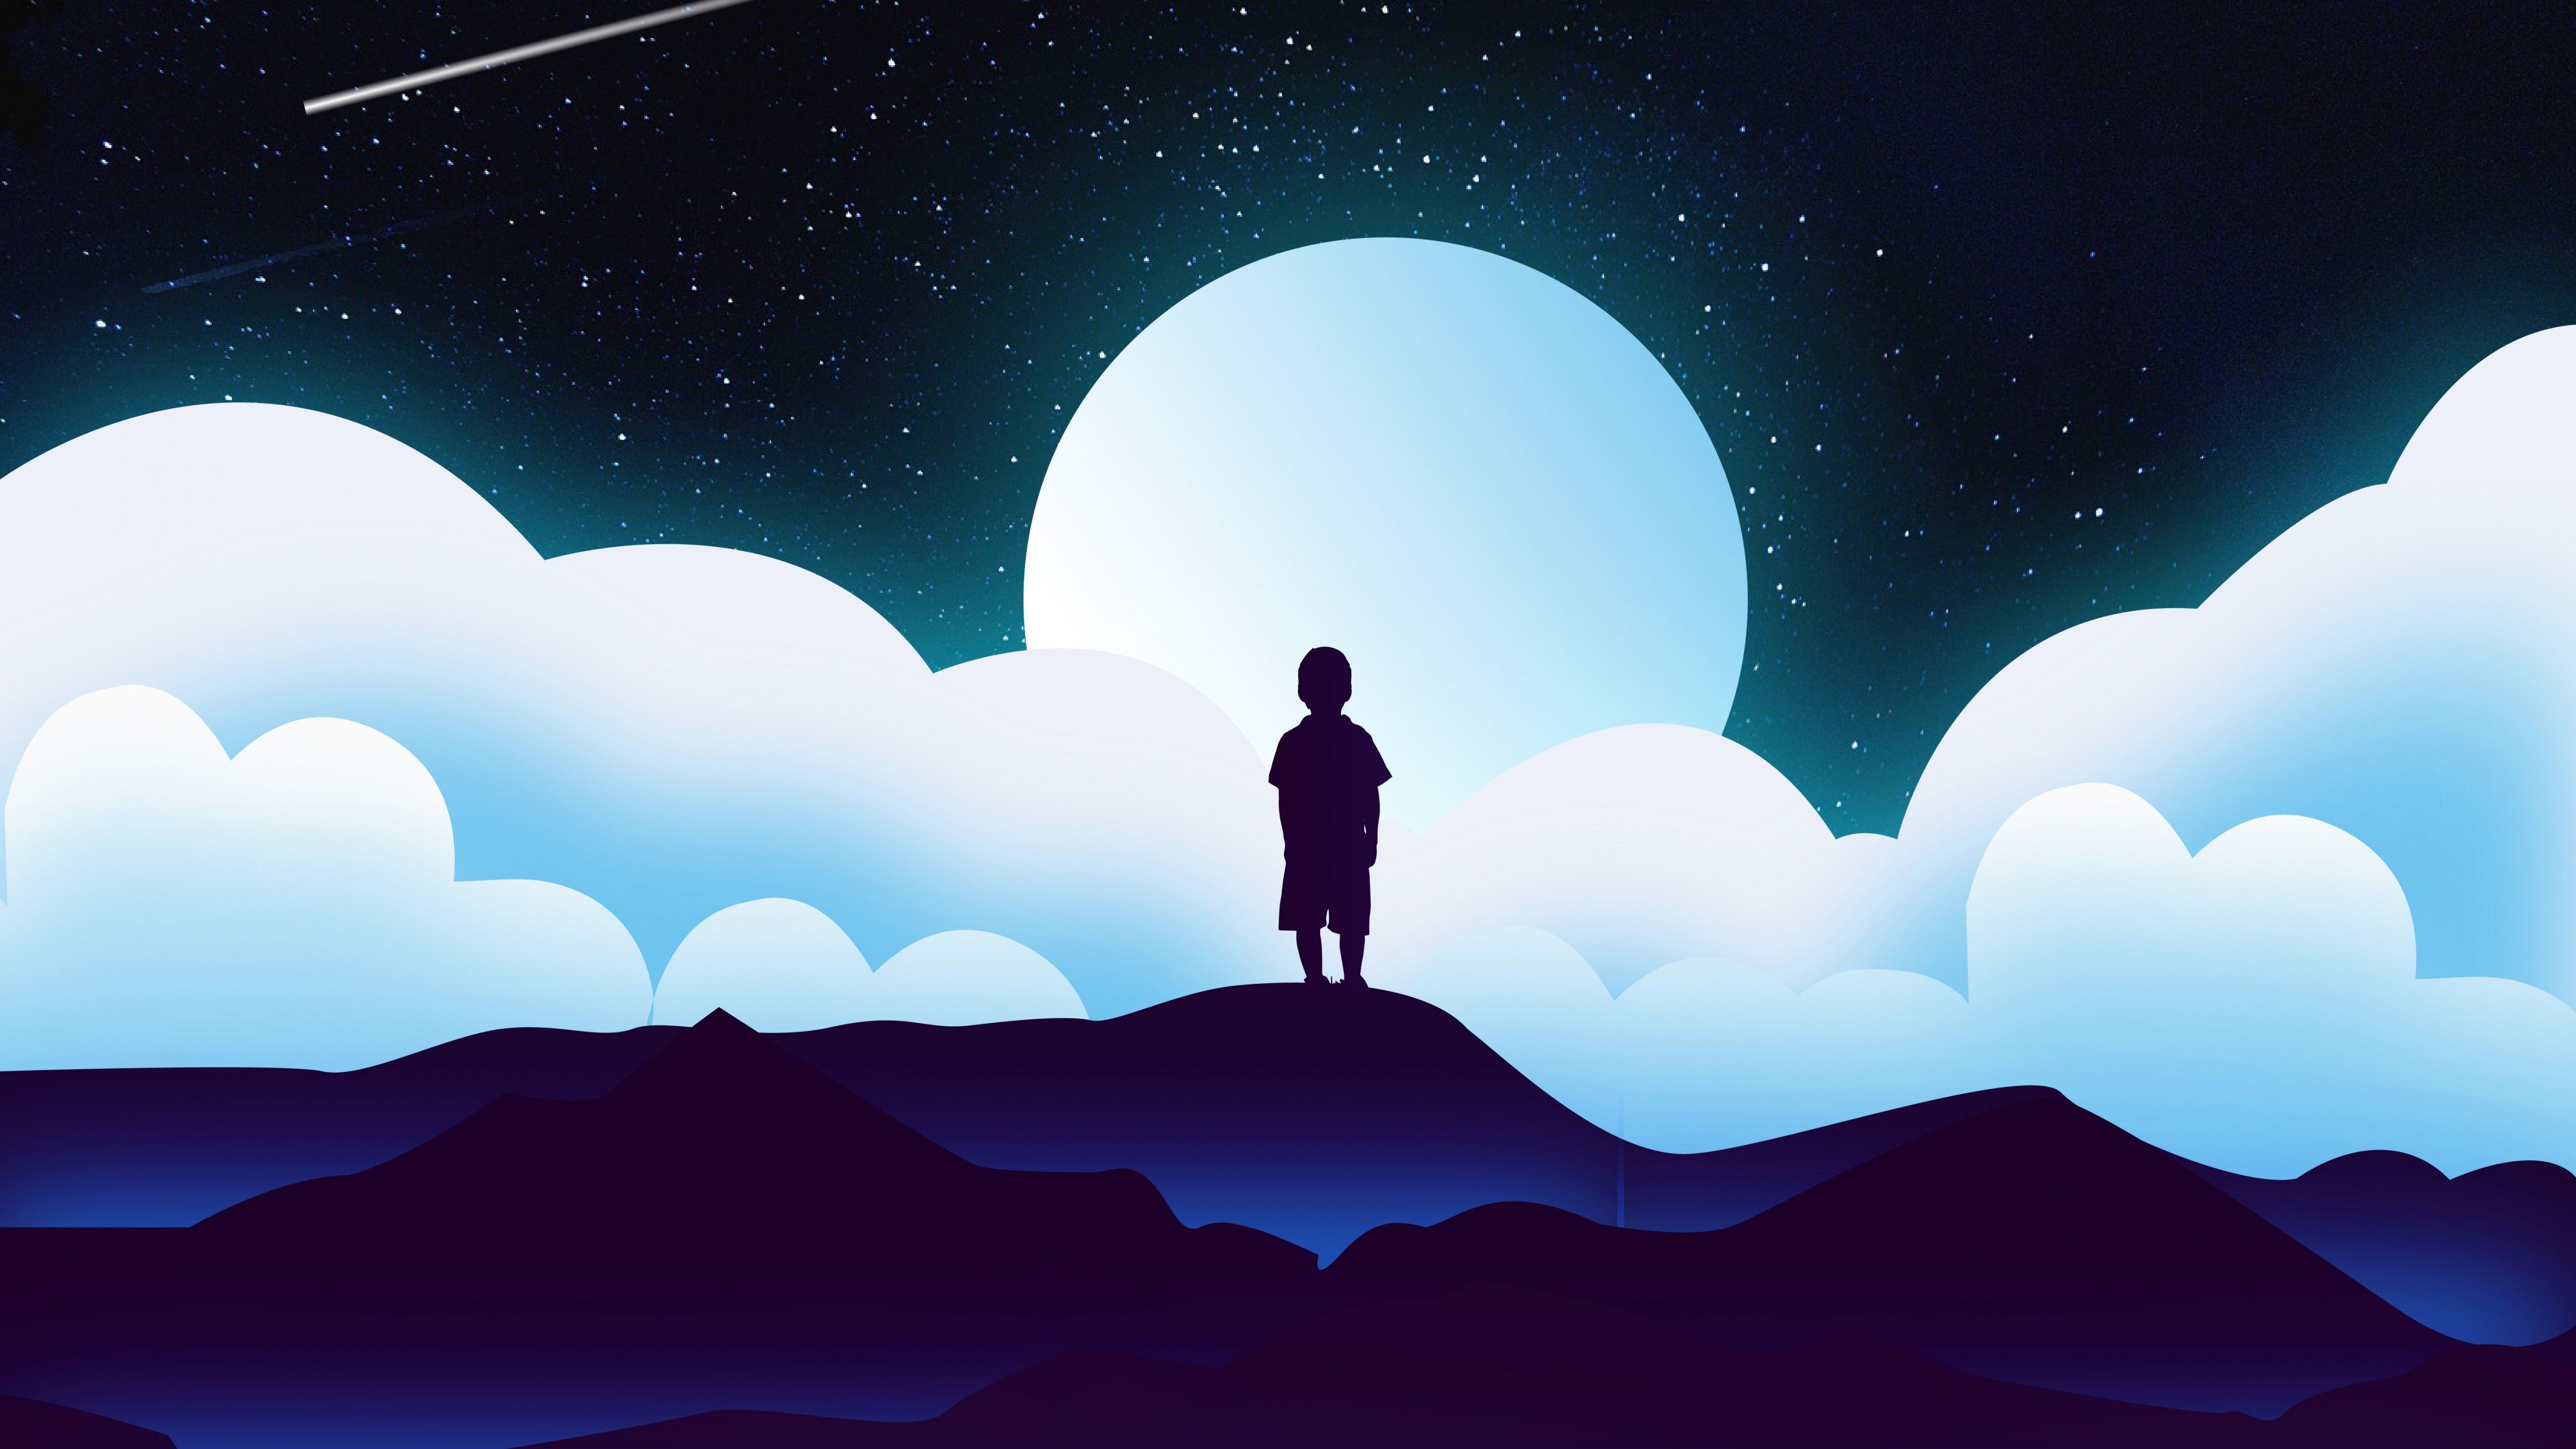 Boy 4K Wallpaper, Kid, Alone, Silhouette, Moon, Night, Clouds, Illustration, Starry sky, 5K, Fantasy